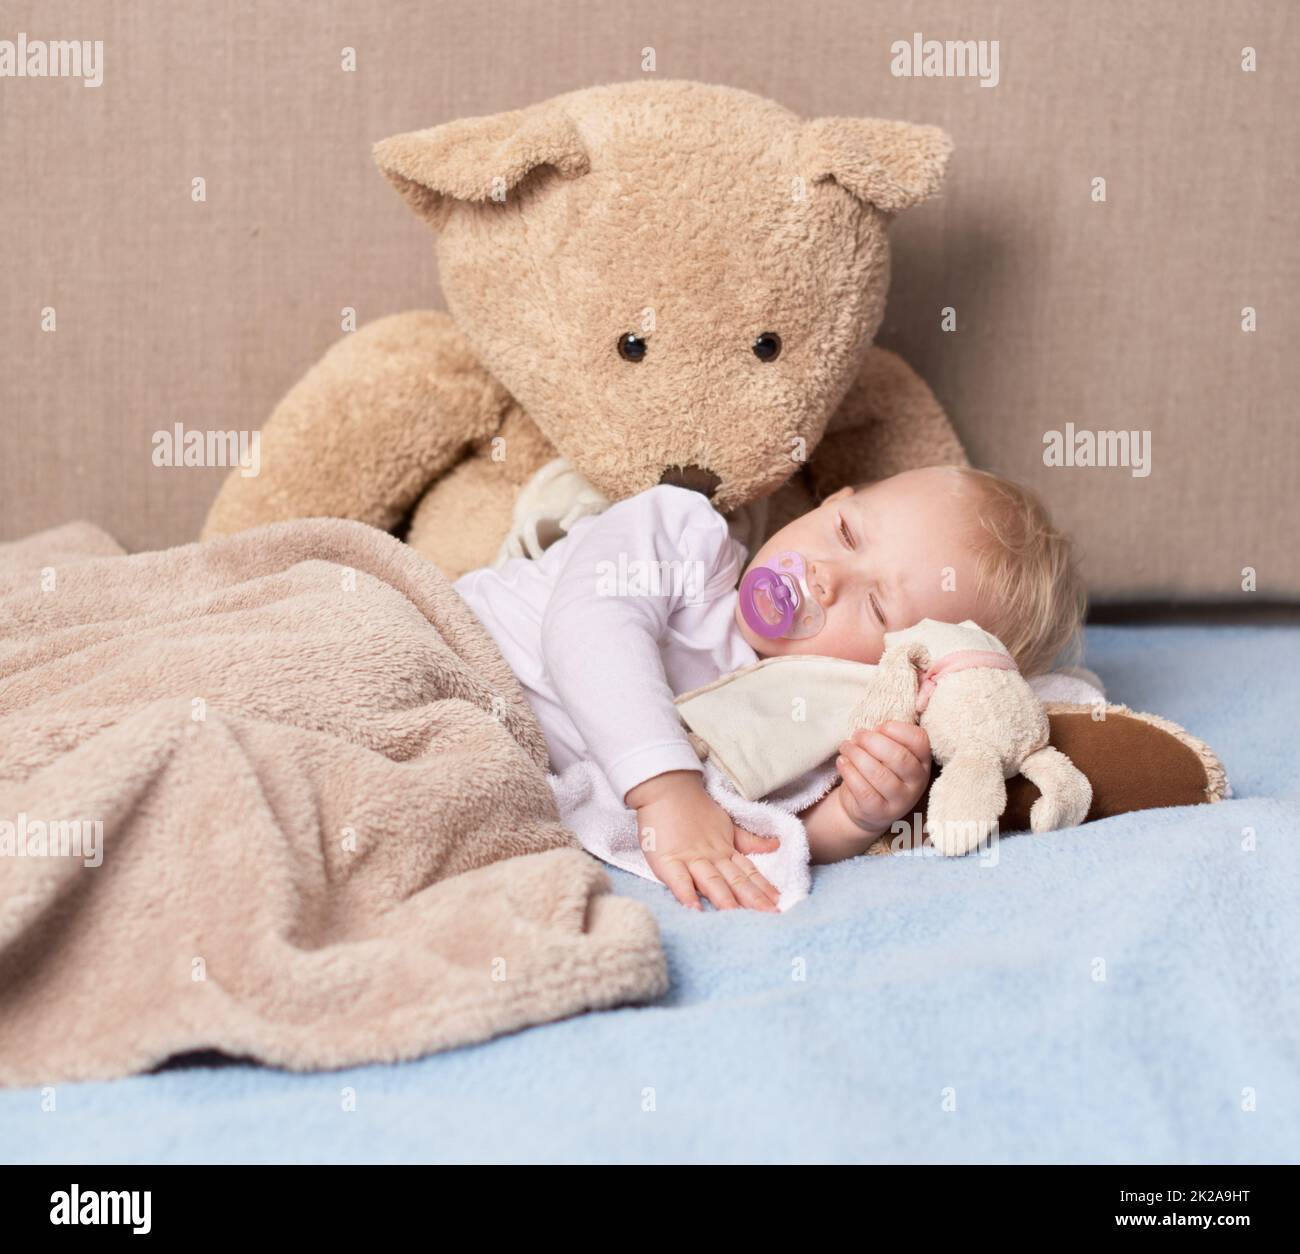 Sleeping angel. Shot of an adorable baby girl sleeping with her toys. Stock Photo